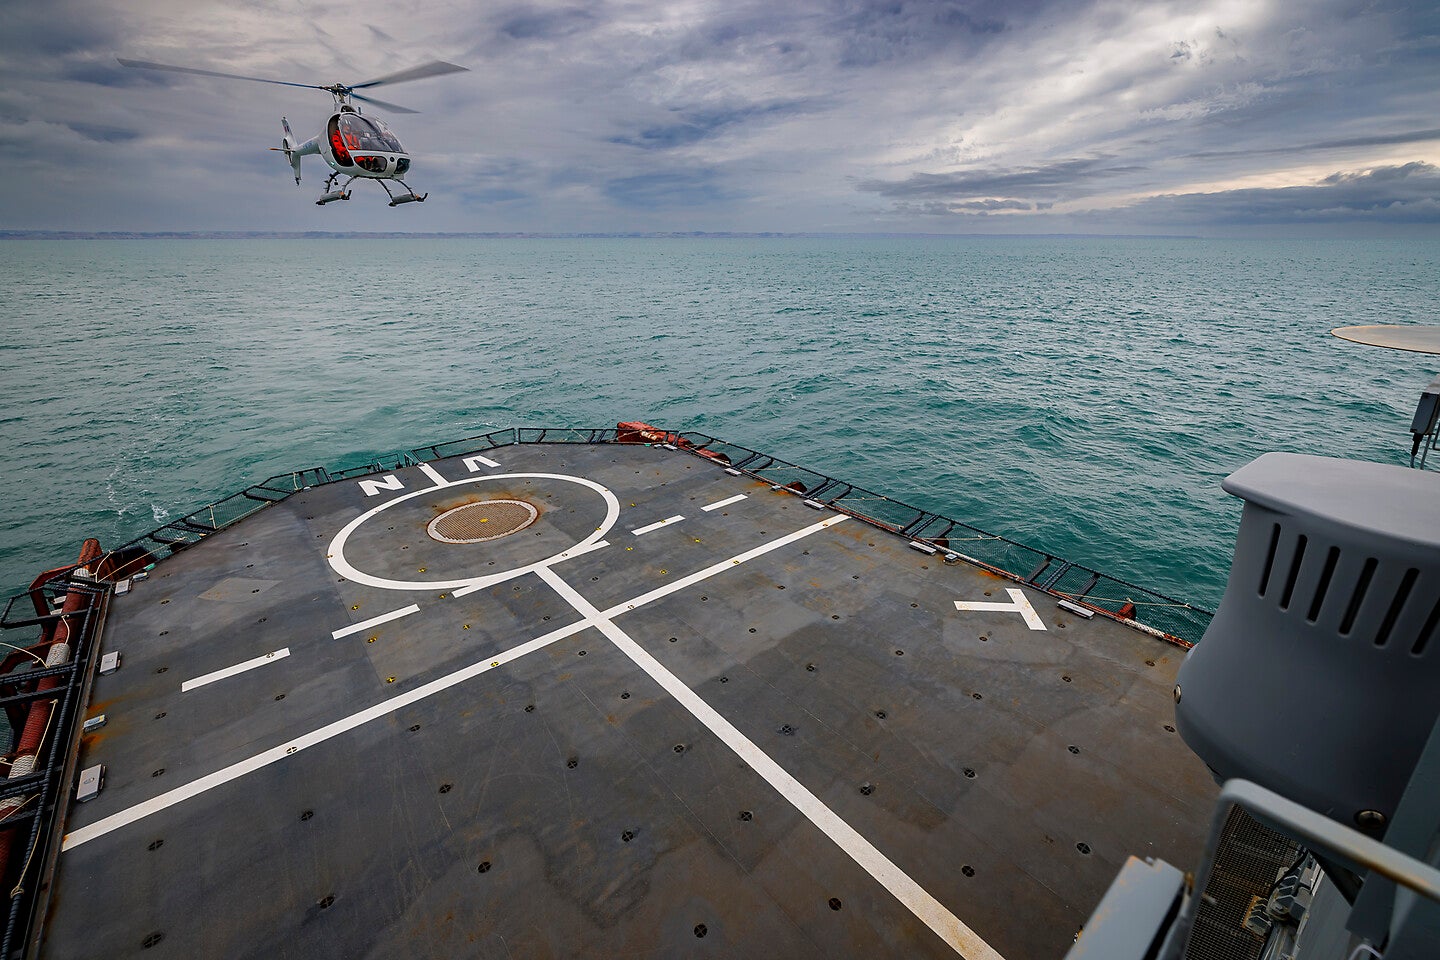 Airbus tests take-off and landing capabilities of VSR700 UAS at sea